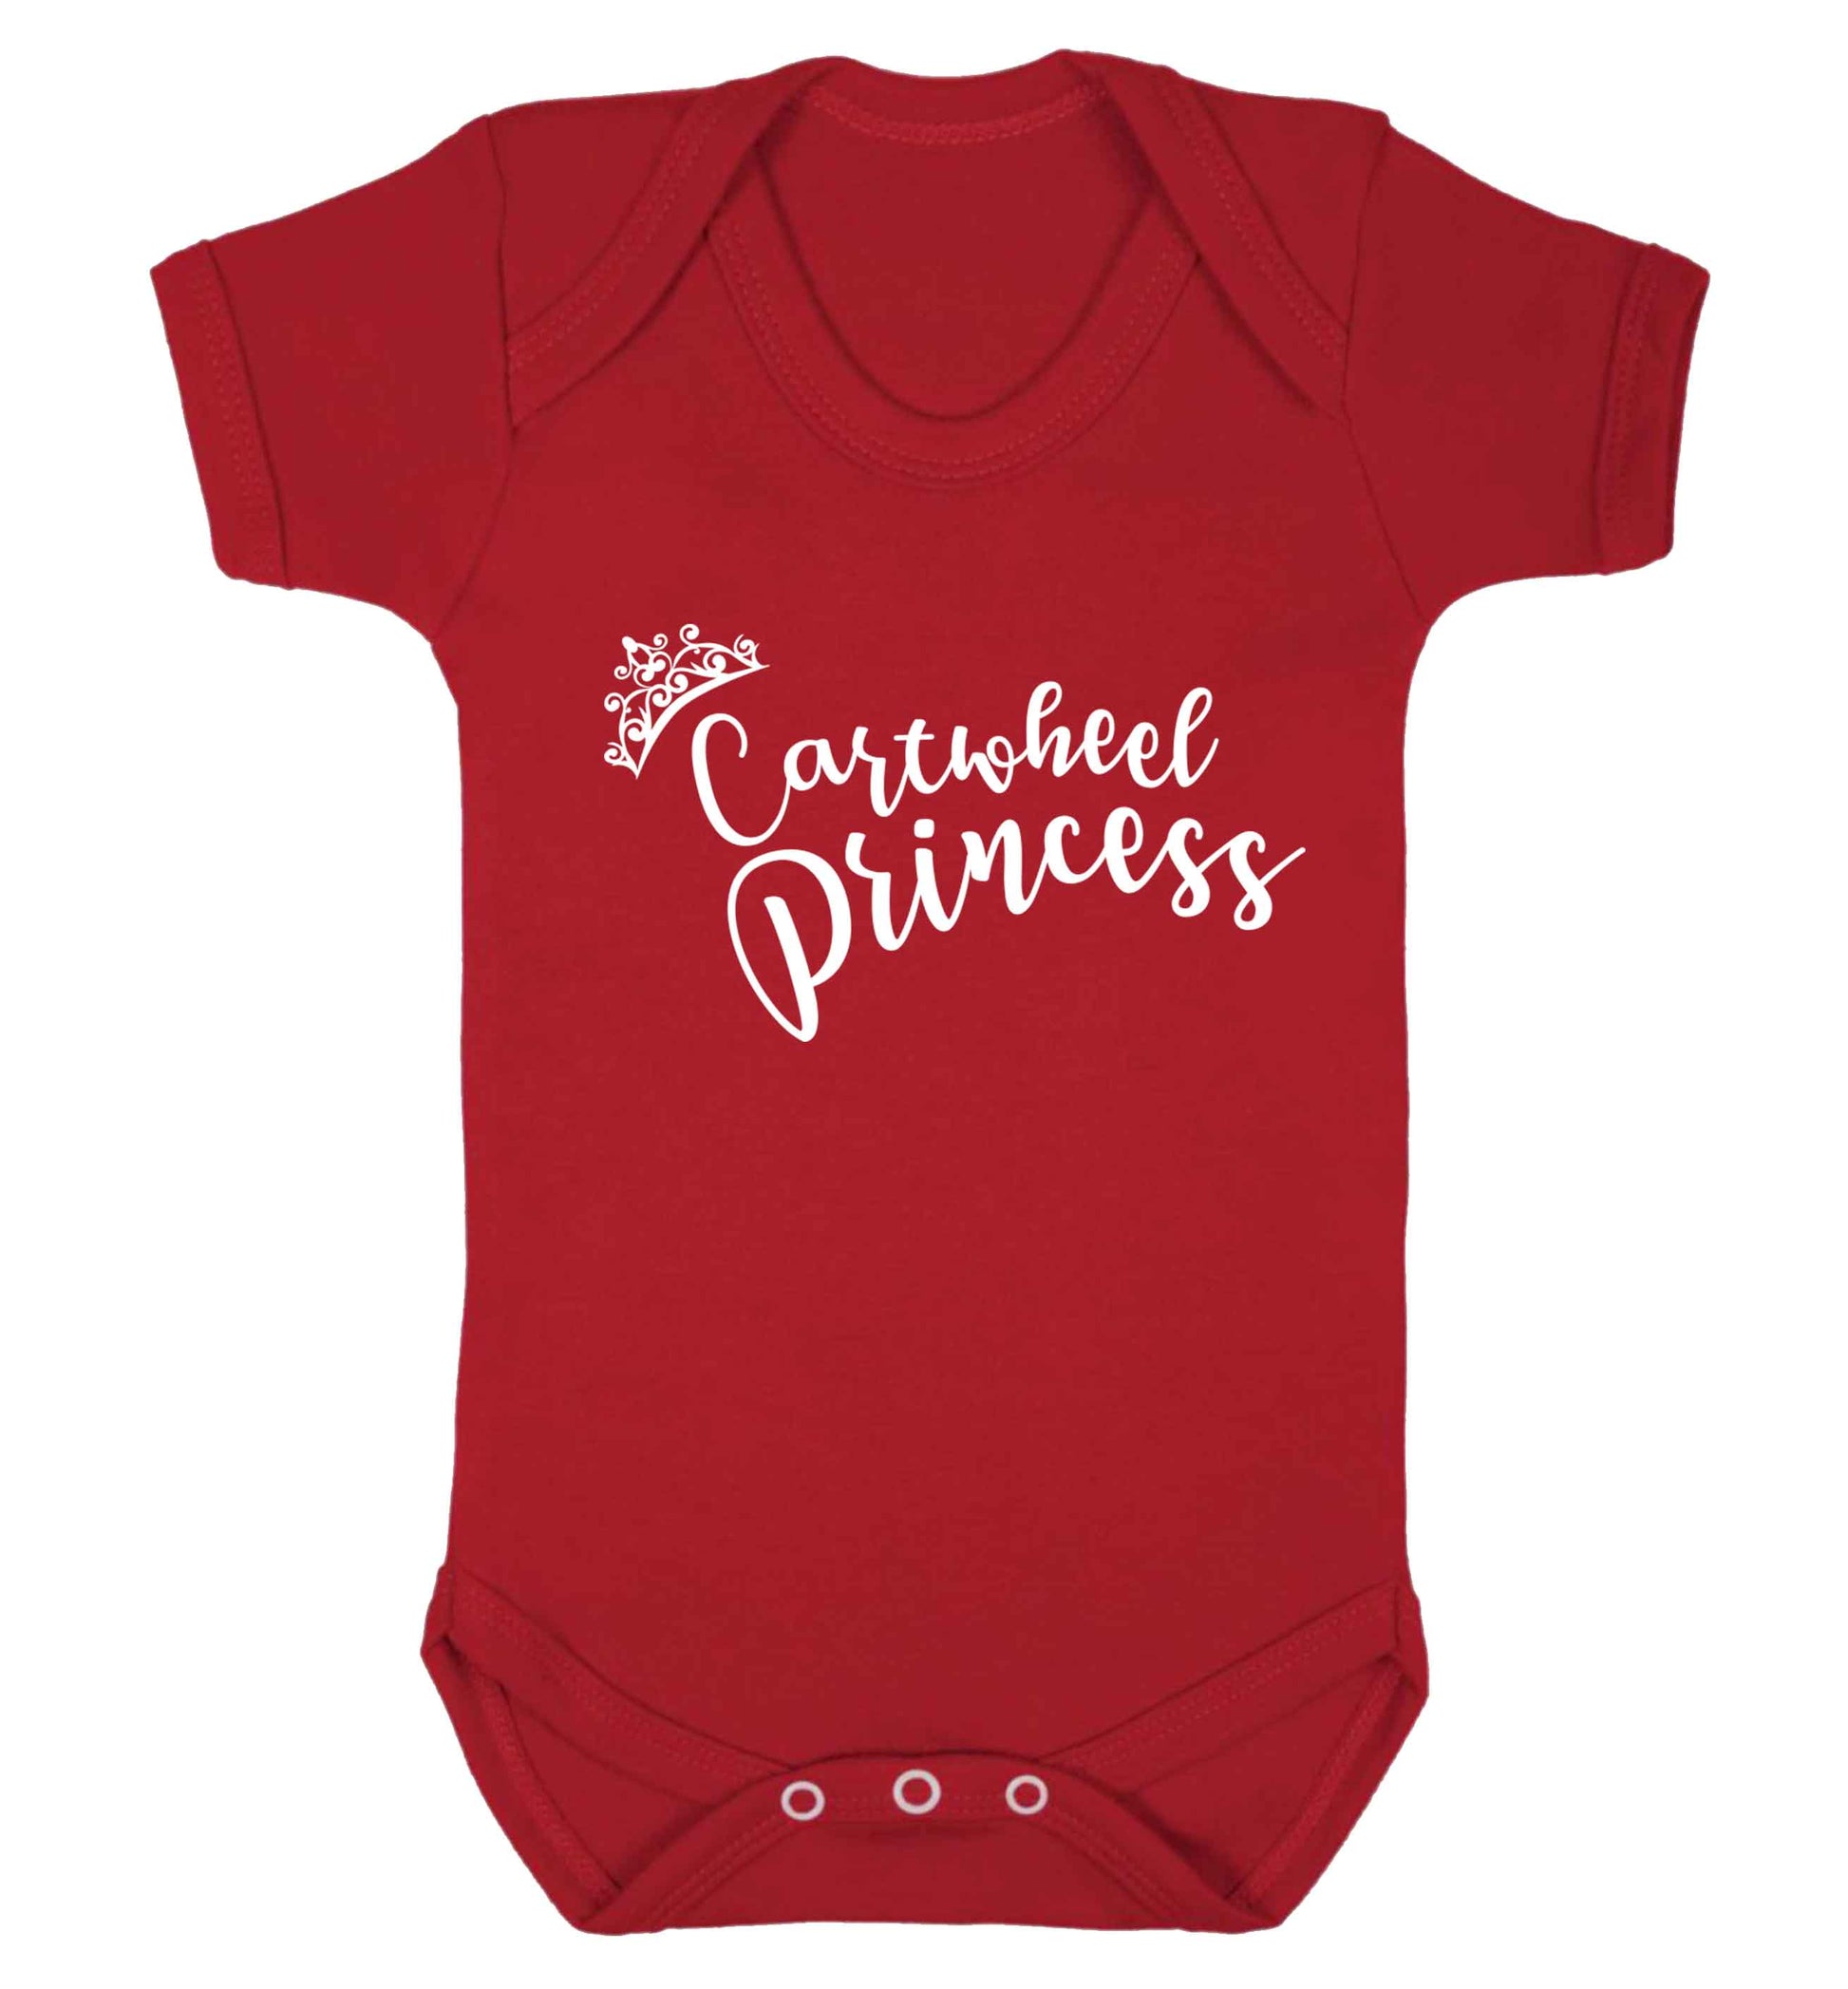 Cartwheel princess Baby Vest red 18-24 months